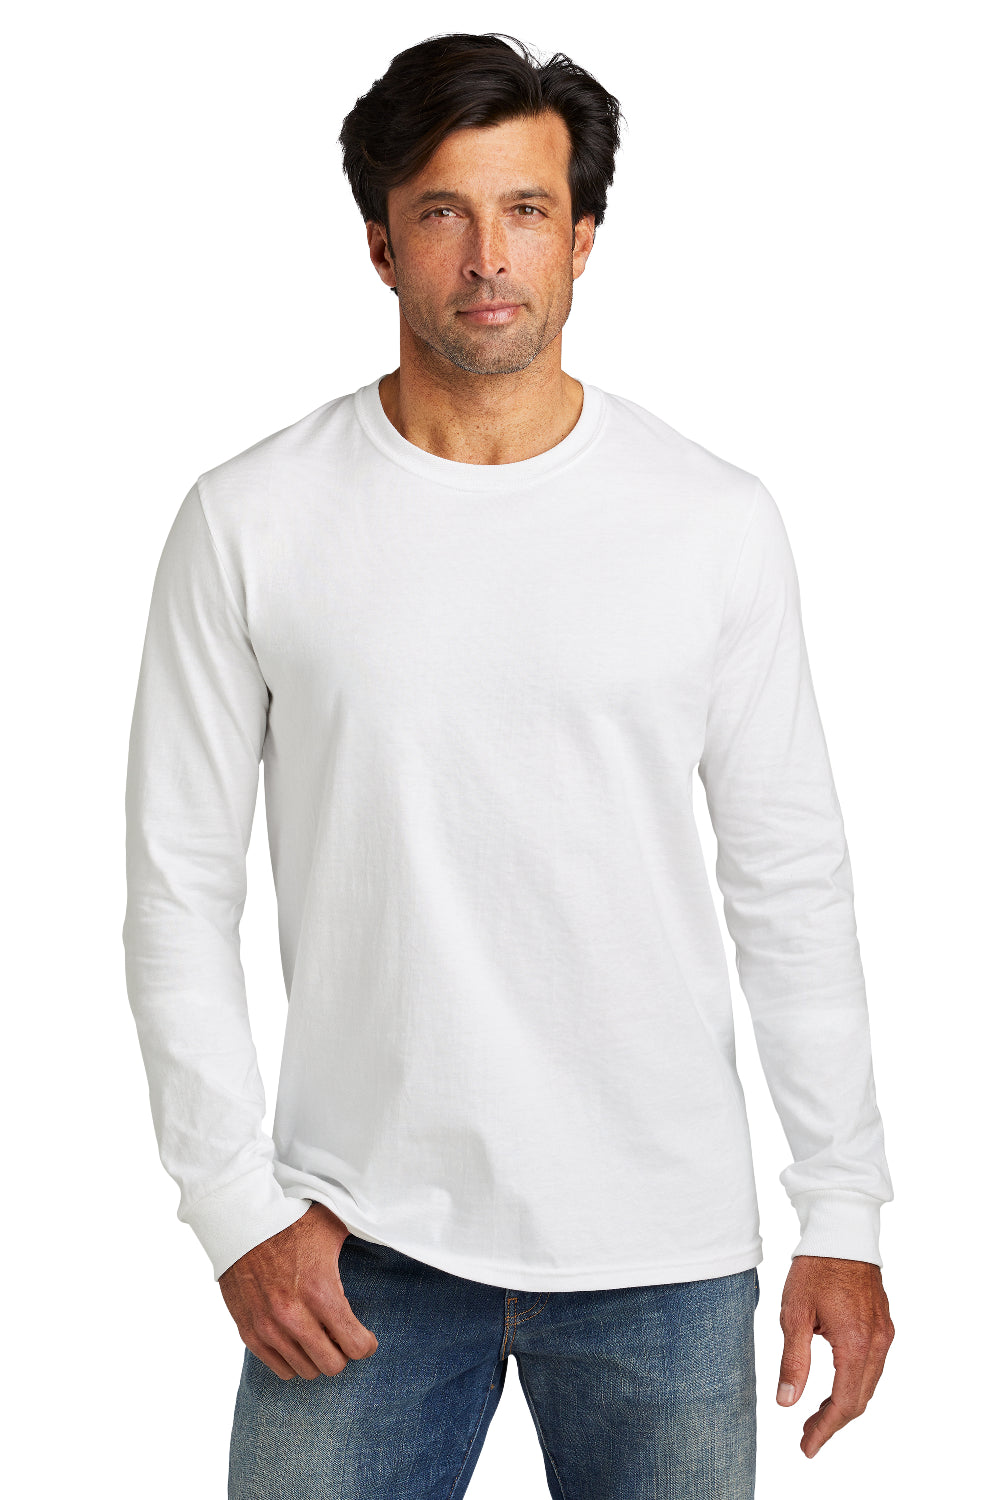 Volunteer Knitwear VL60LS Chore Long Sleeve Crewneck T-Shirt White Front